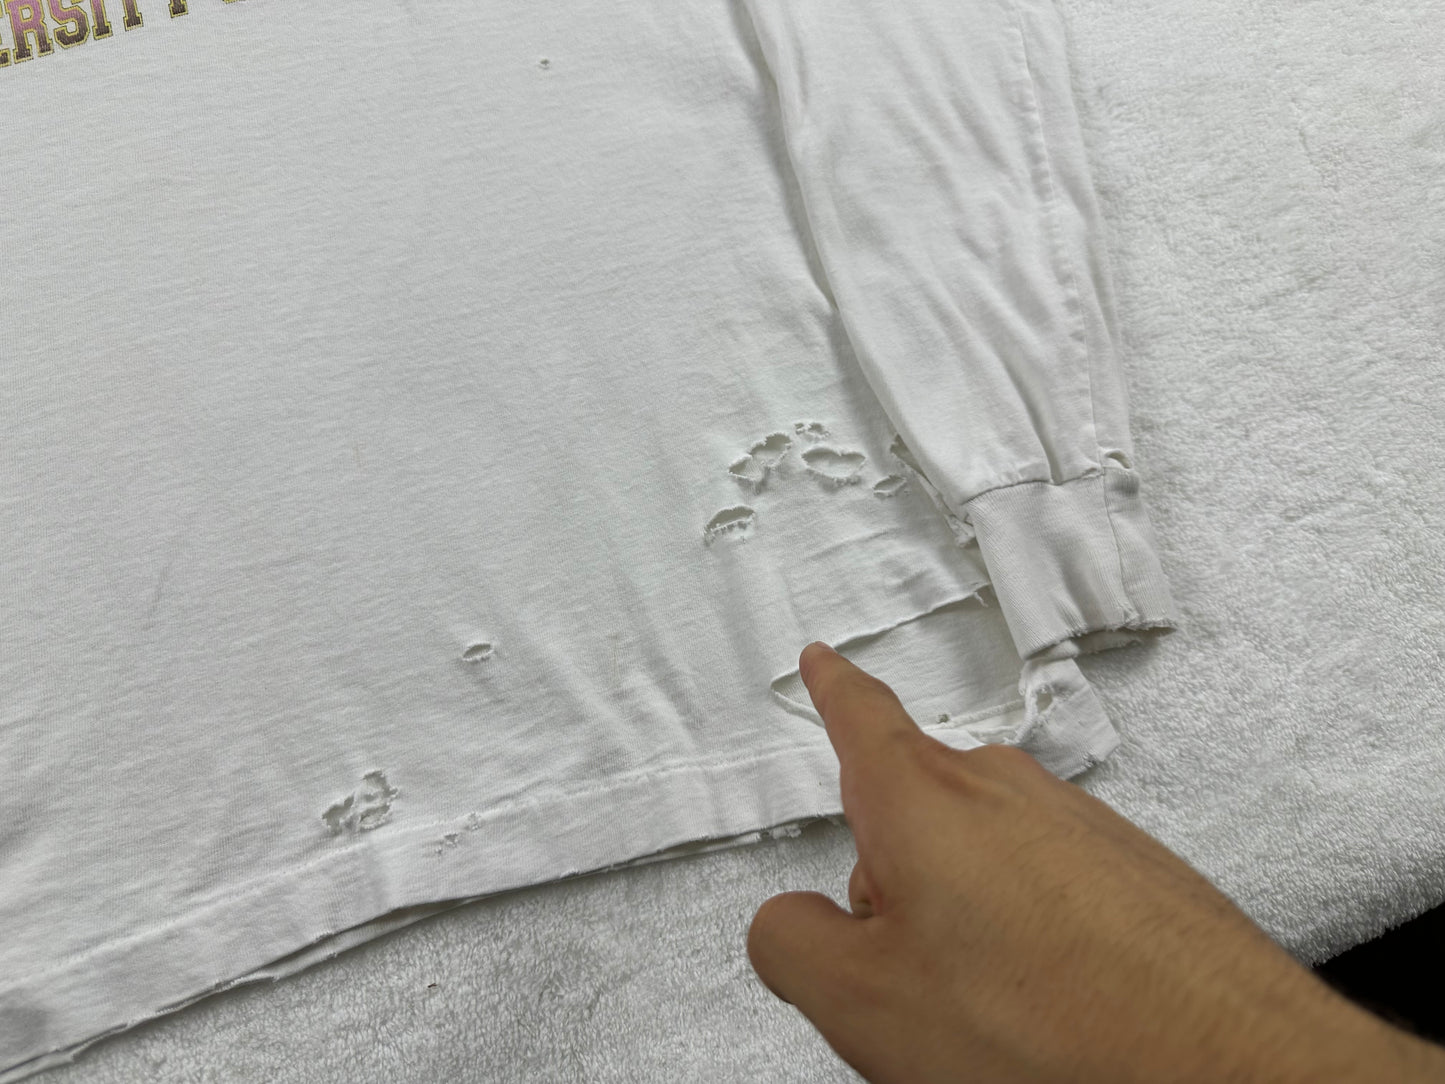 Michigan Distressed Long-Sleeve T-Shirt